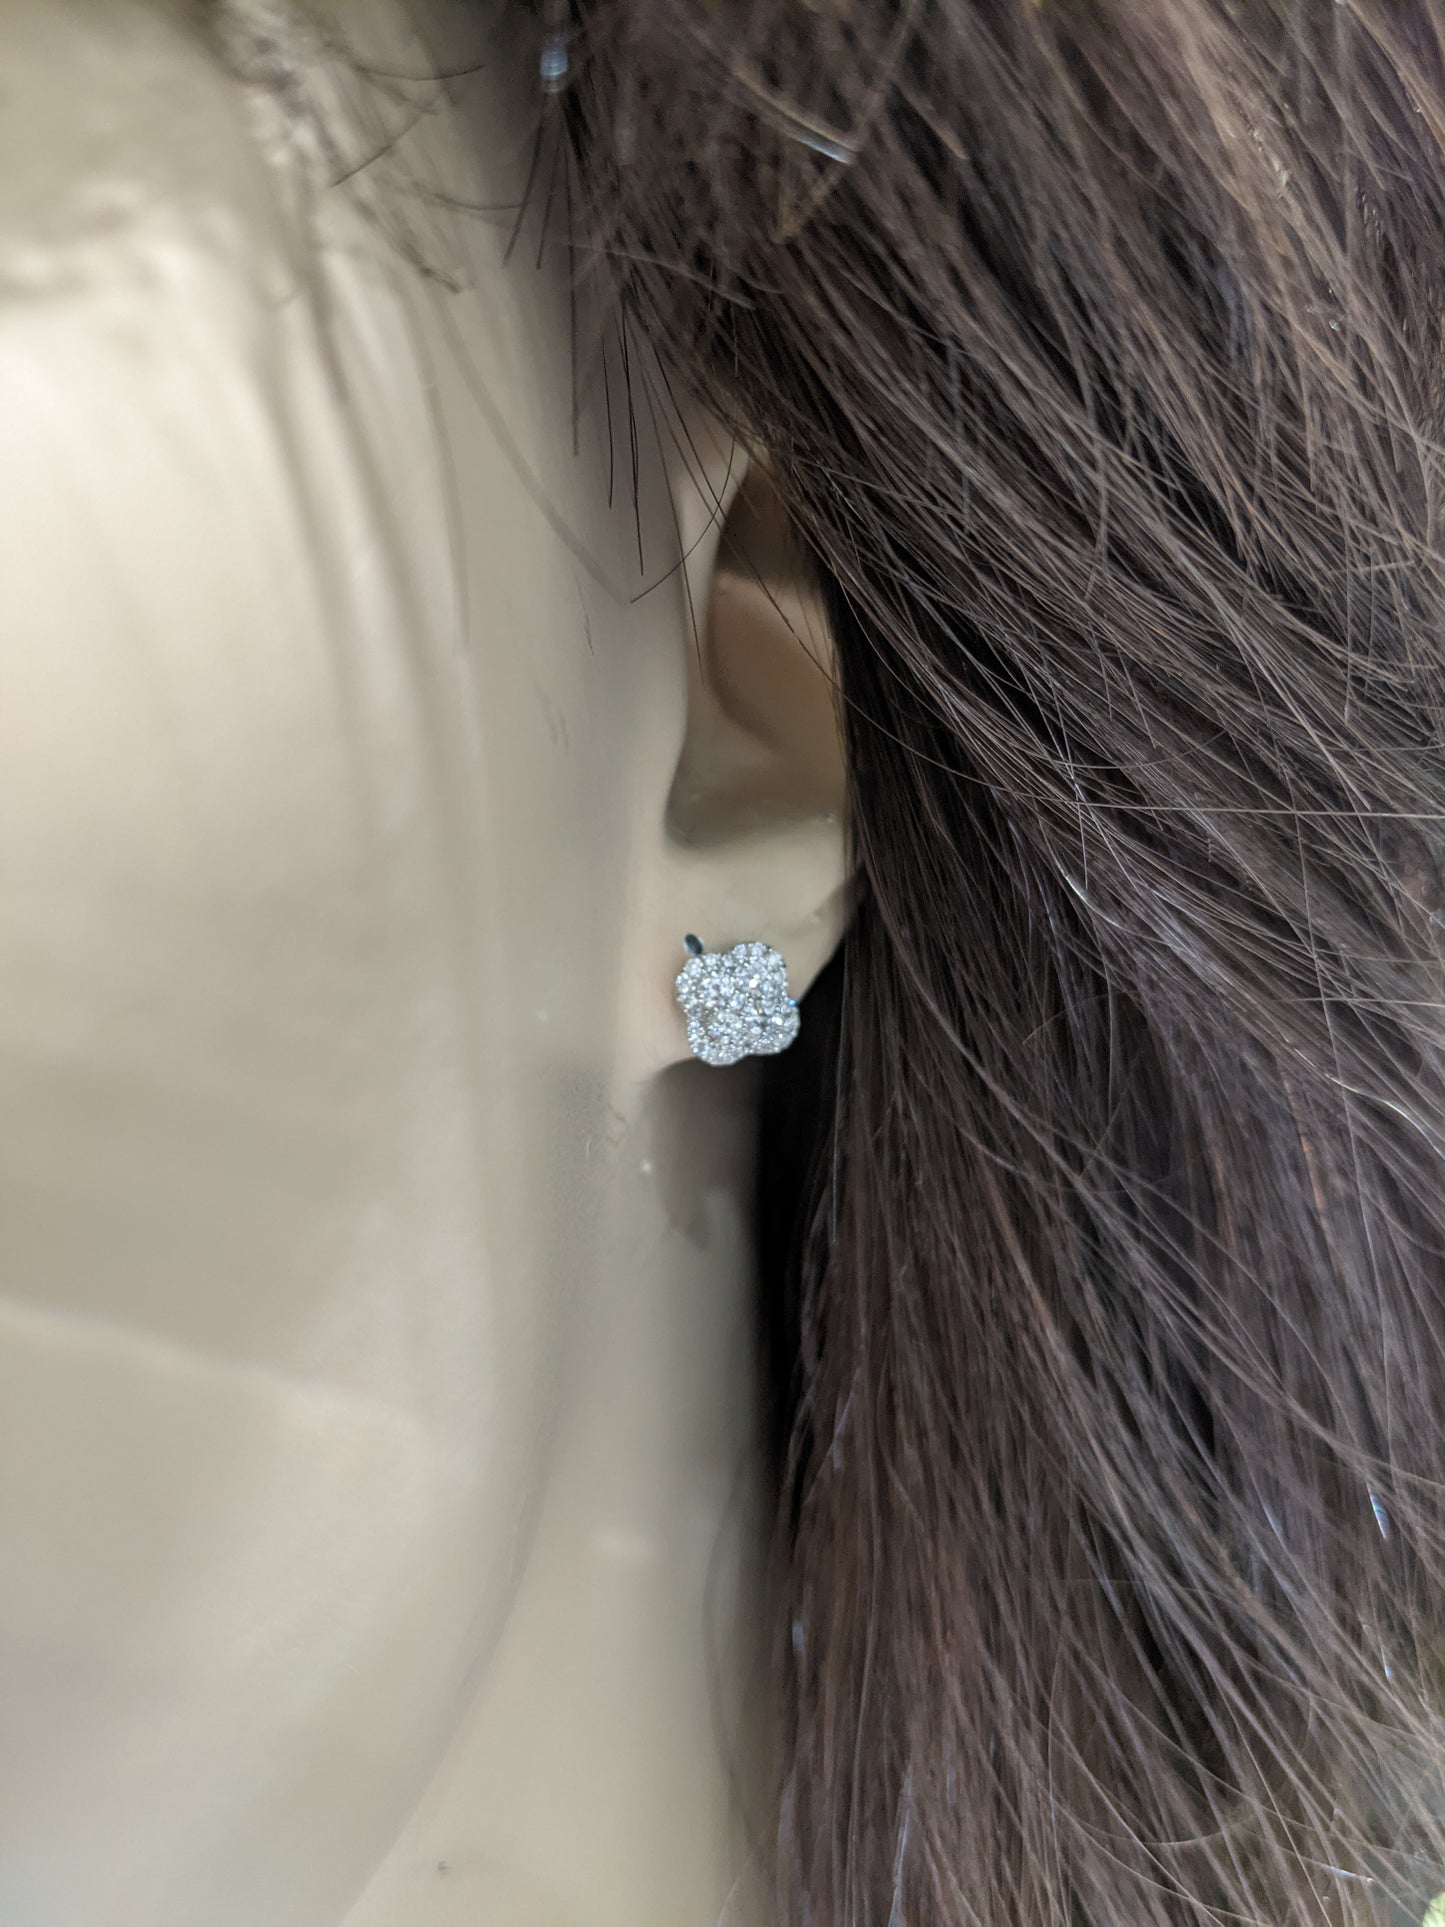 18K Gold And Diamond Clover Stud Earring - HK Jewels